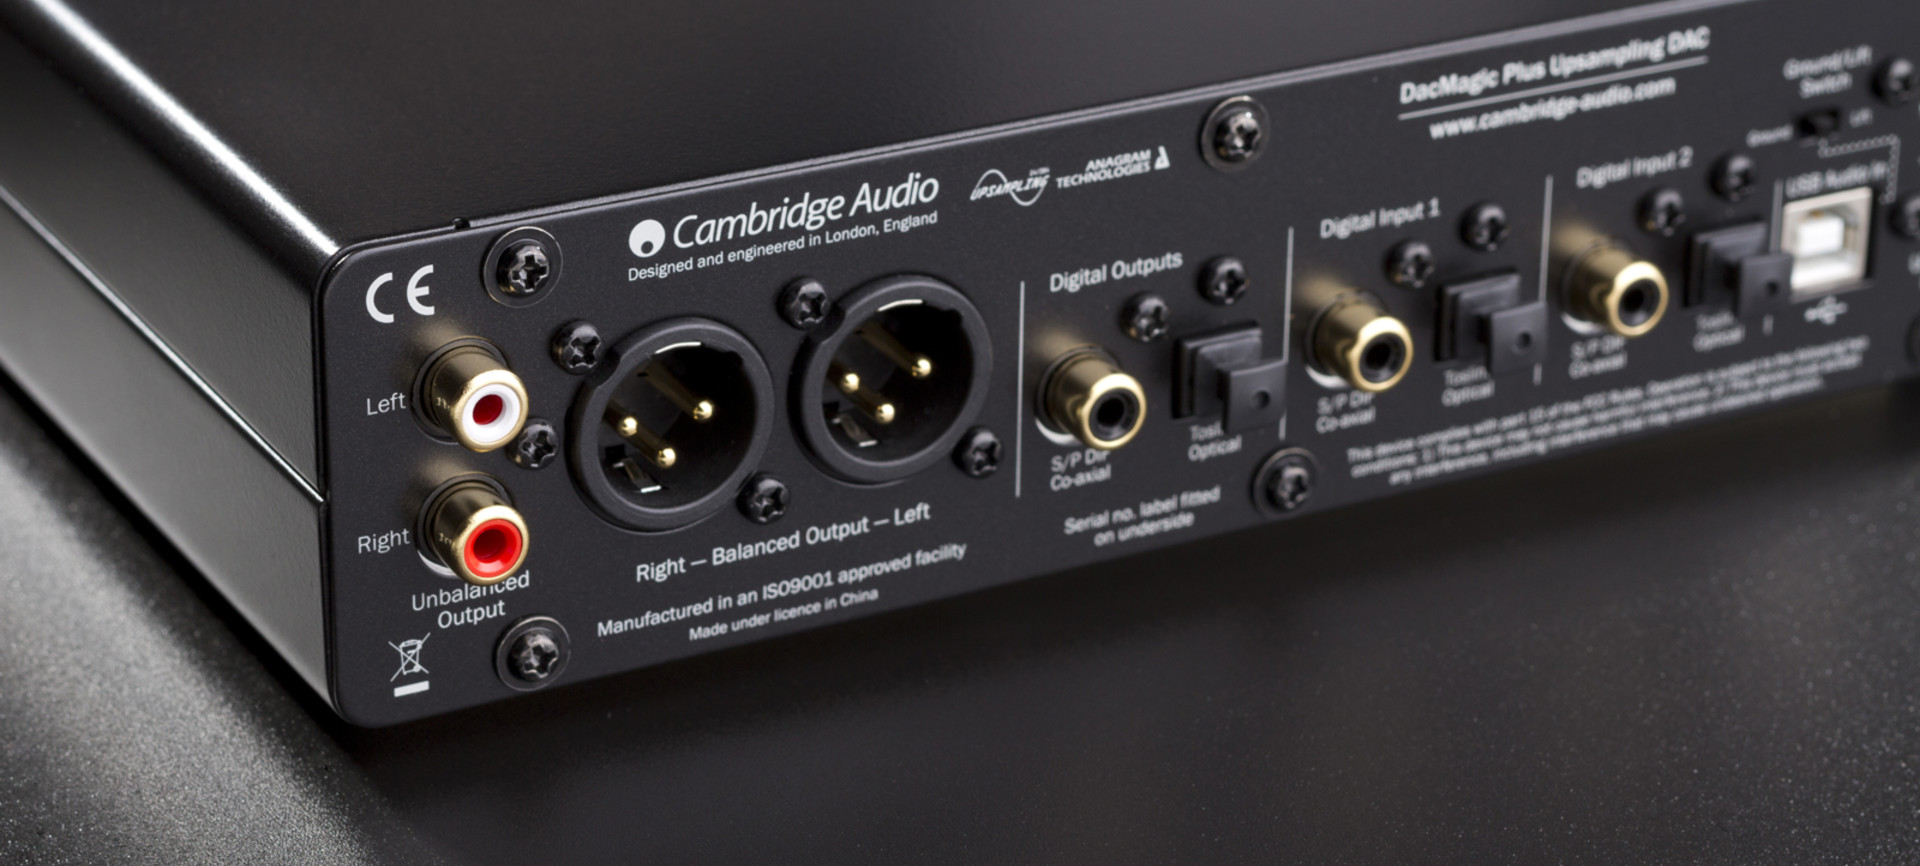 Цап с качественным звуком. Cambridge Audio DAC. Cambridge Audio DACMAGIC Plus. ЦАП Cambridge Audio DACMAGIC Plus. Cambridge Audio DACMAGIC 100.